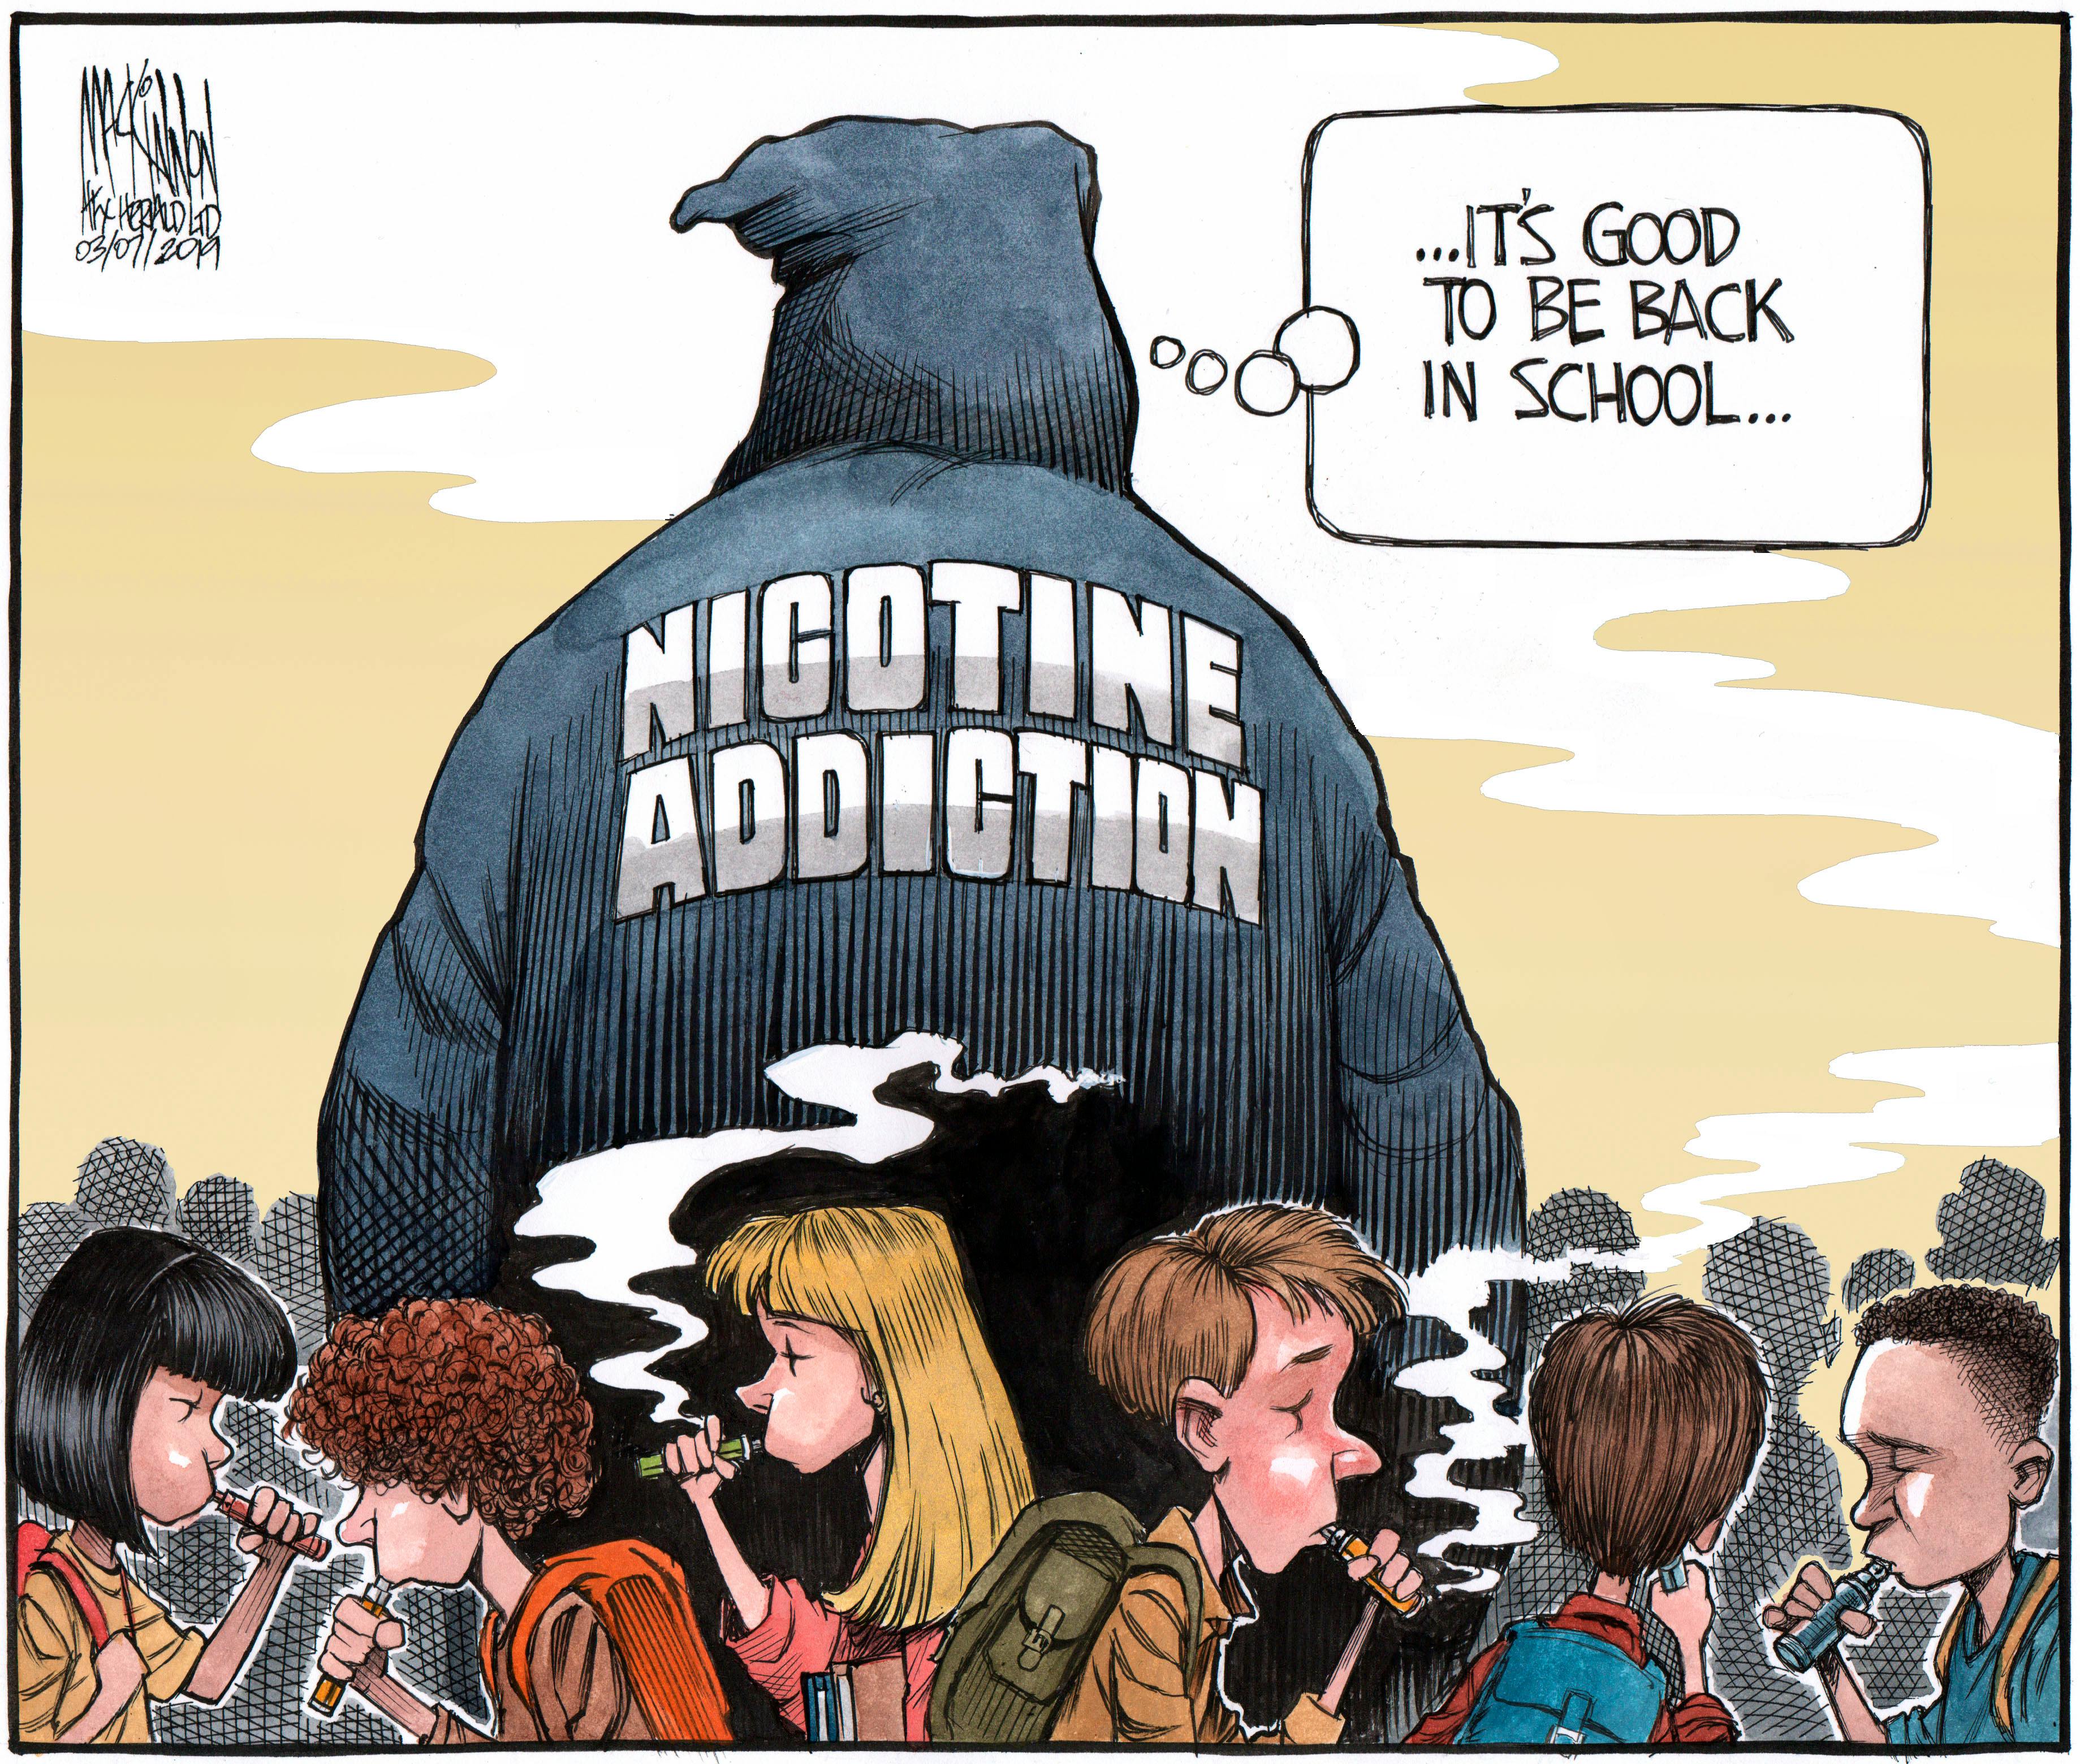 Bruce MacKinnon's March 7, 2019 cartoon.